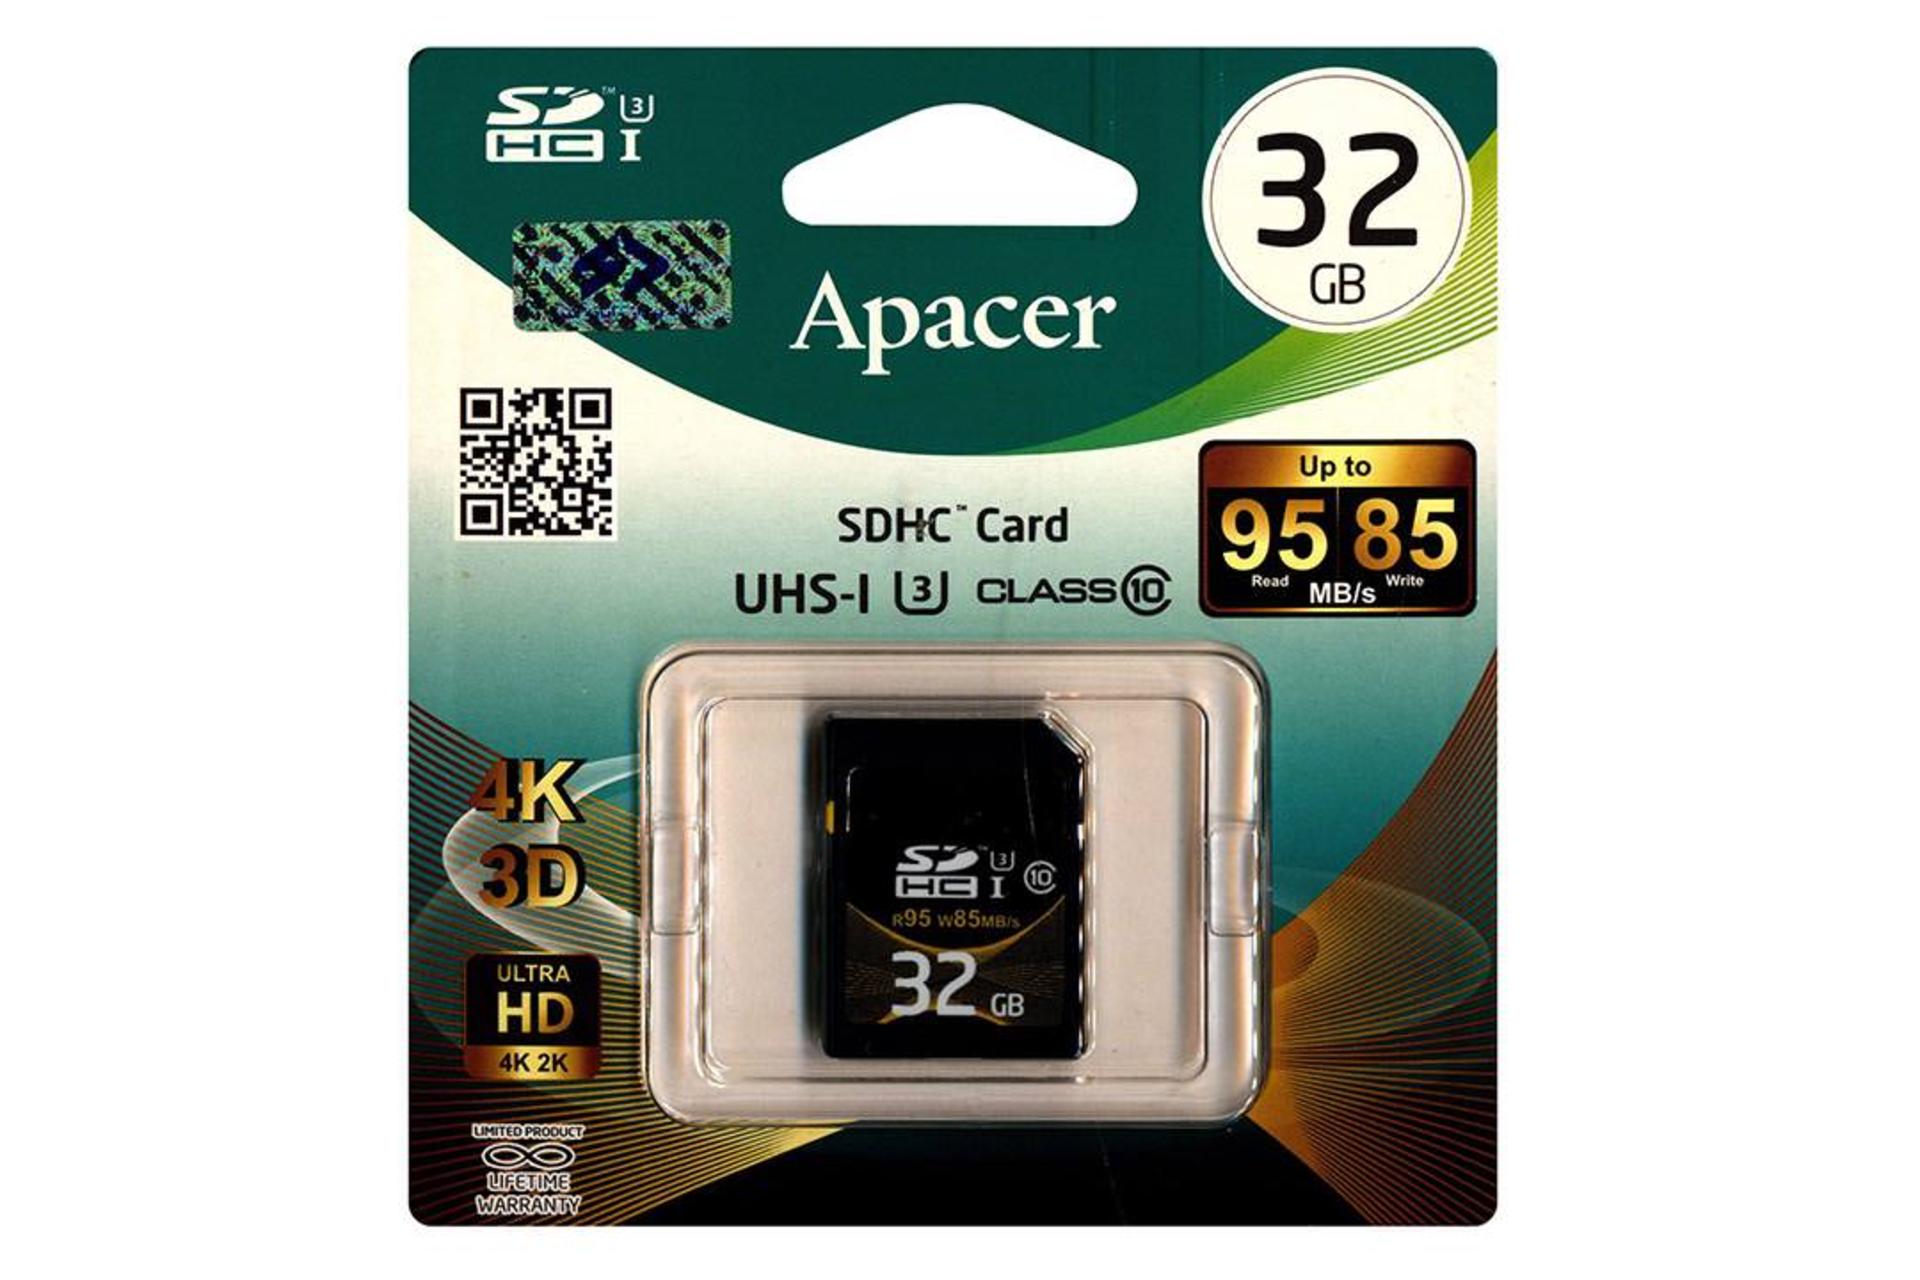 Apacer SDHC Class 10 UHS-I U3 32GB